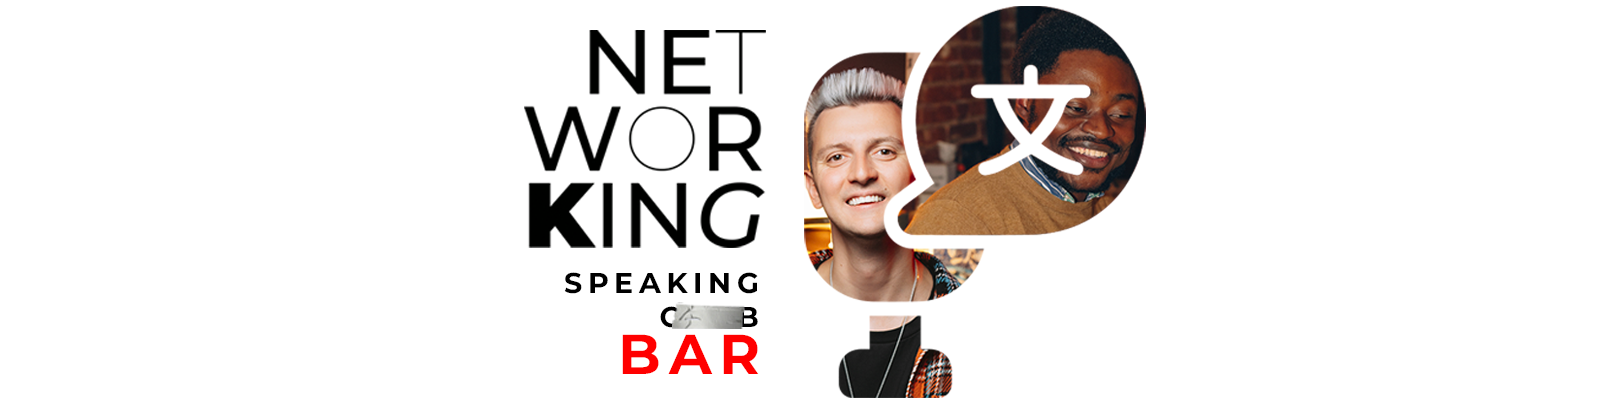 Networking Speaking Bar #8